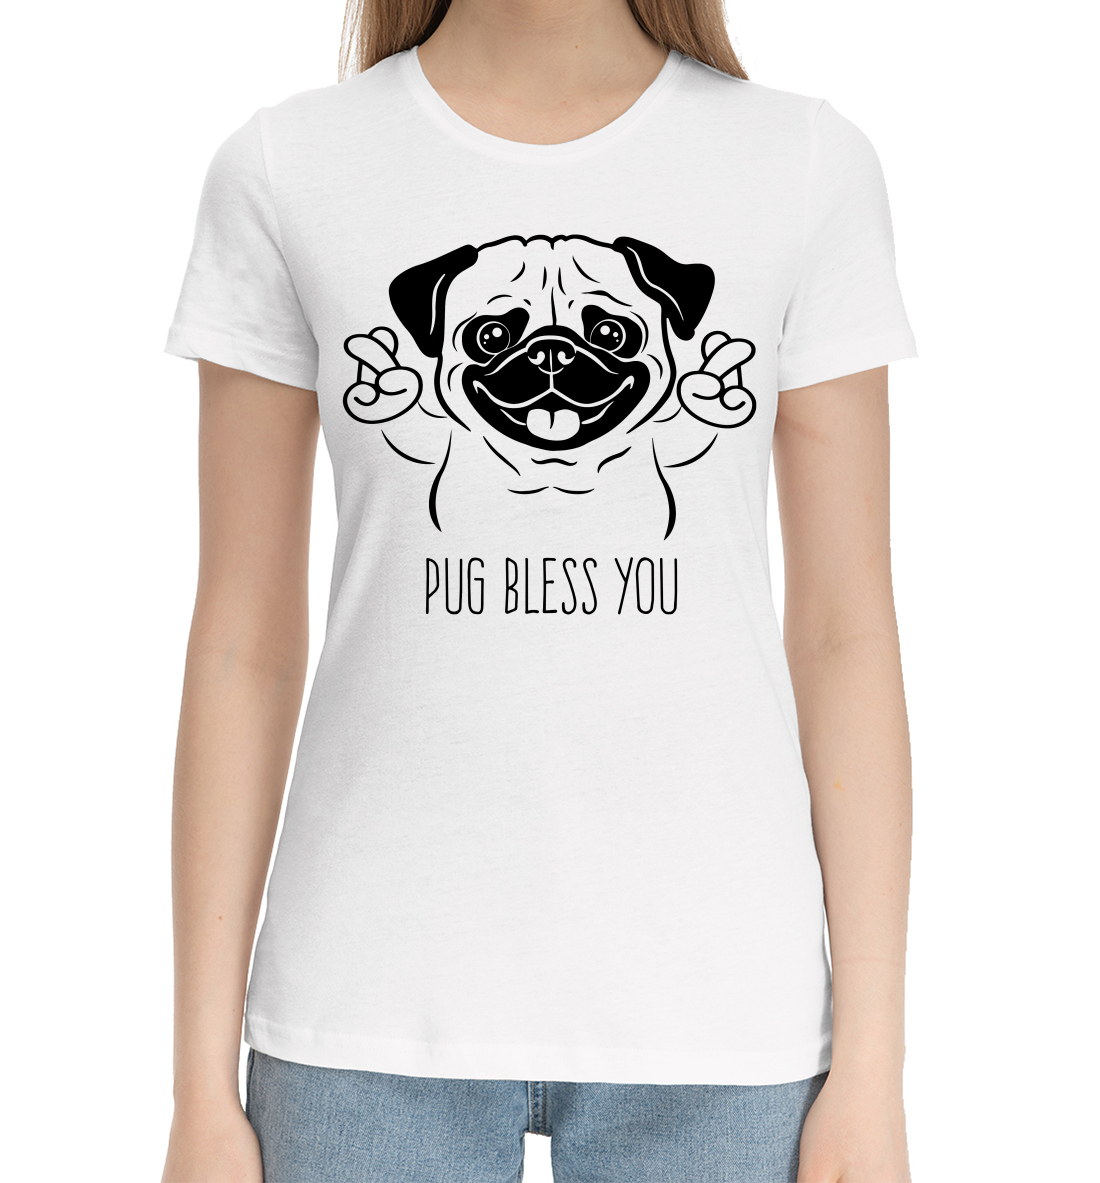 Pug bless you pug bless you